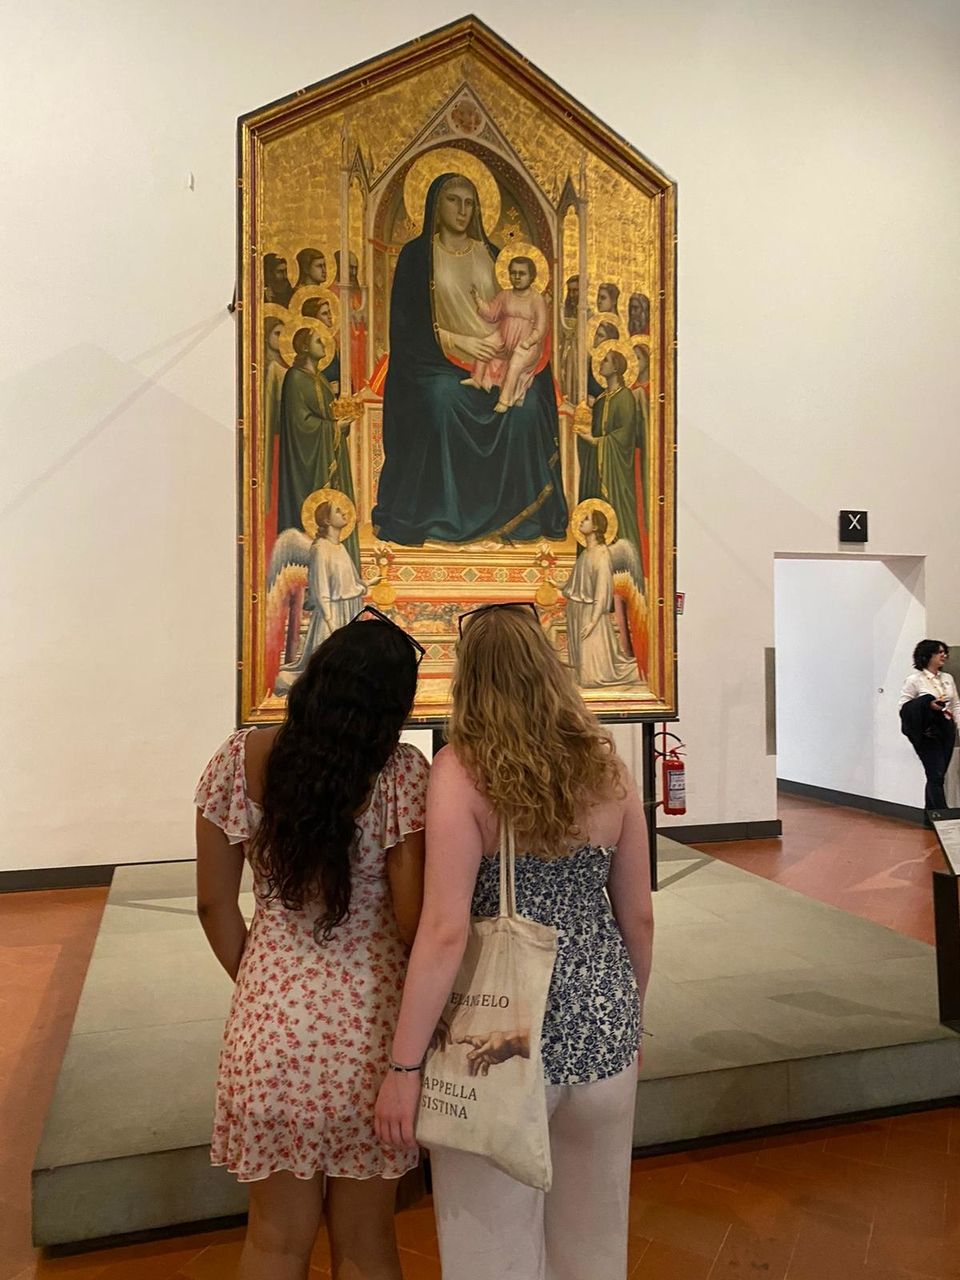 Students in the Uffizi Museum